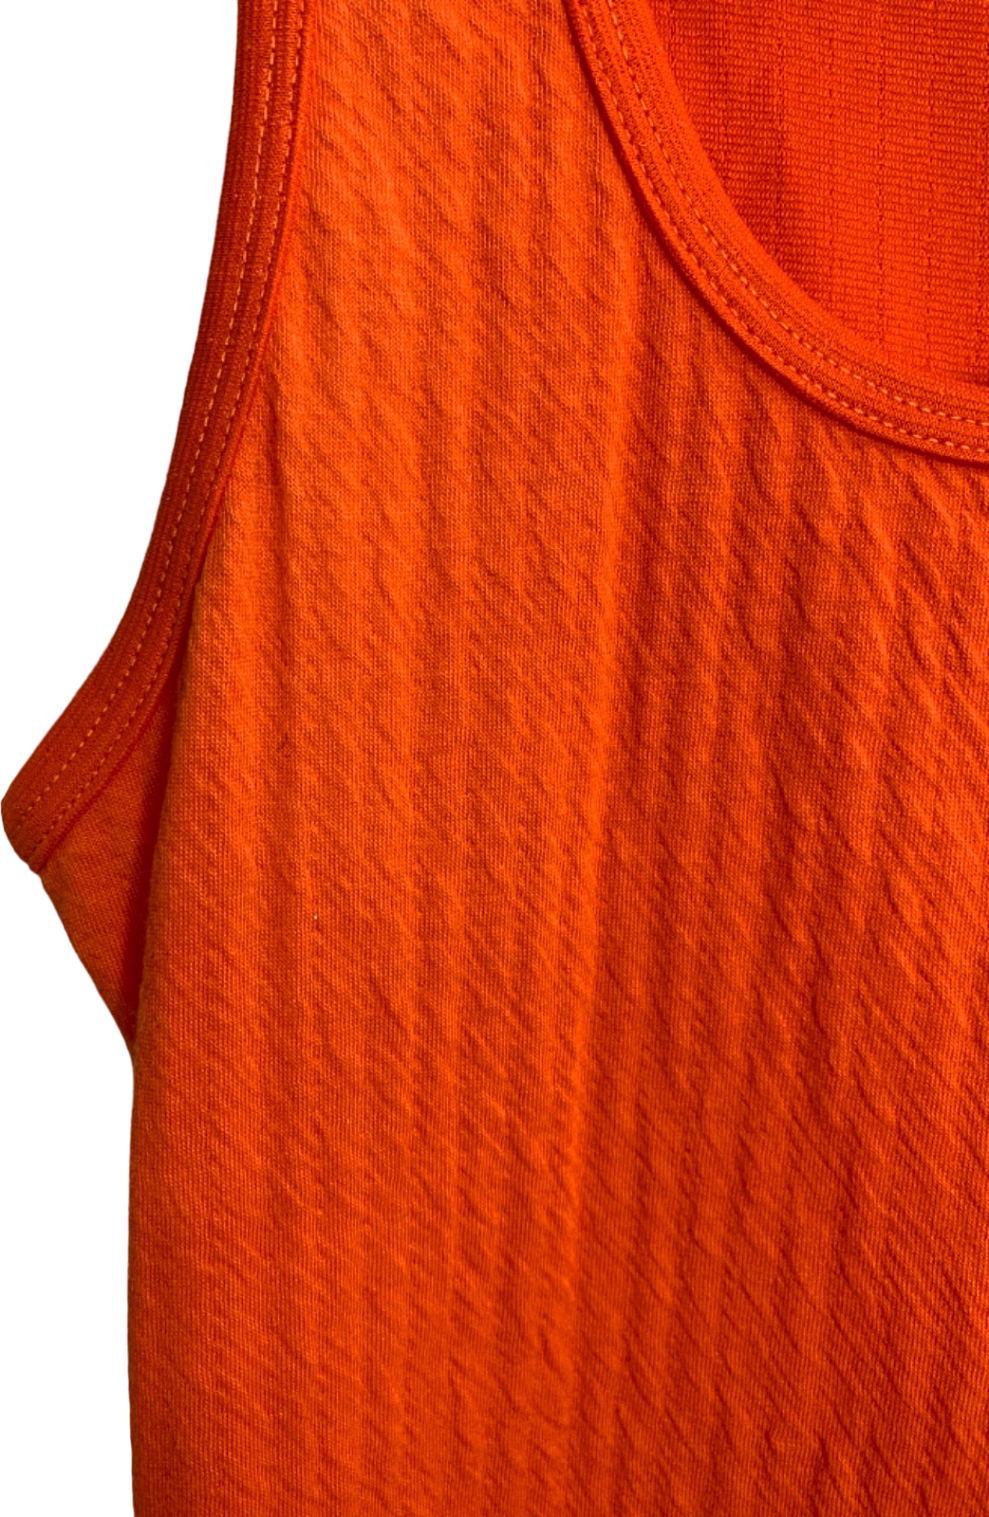 Fashion Nova Orange Ribbed Bodycon Dress S